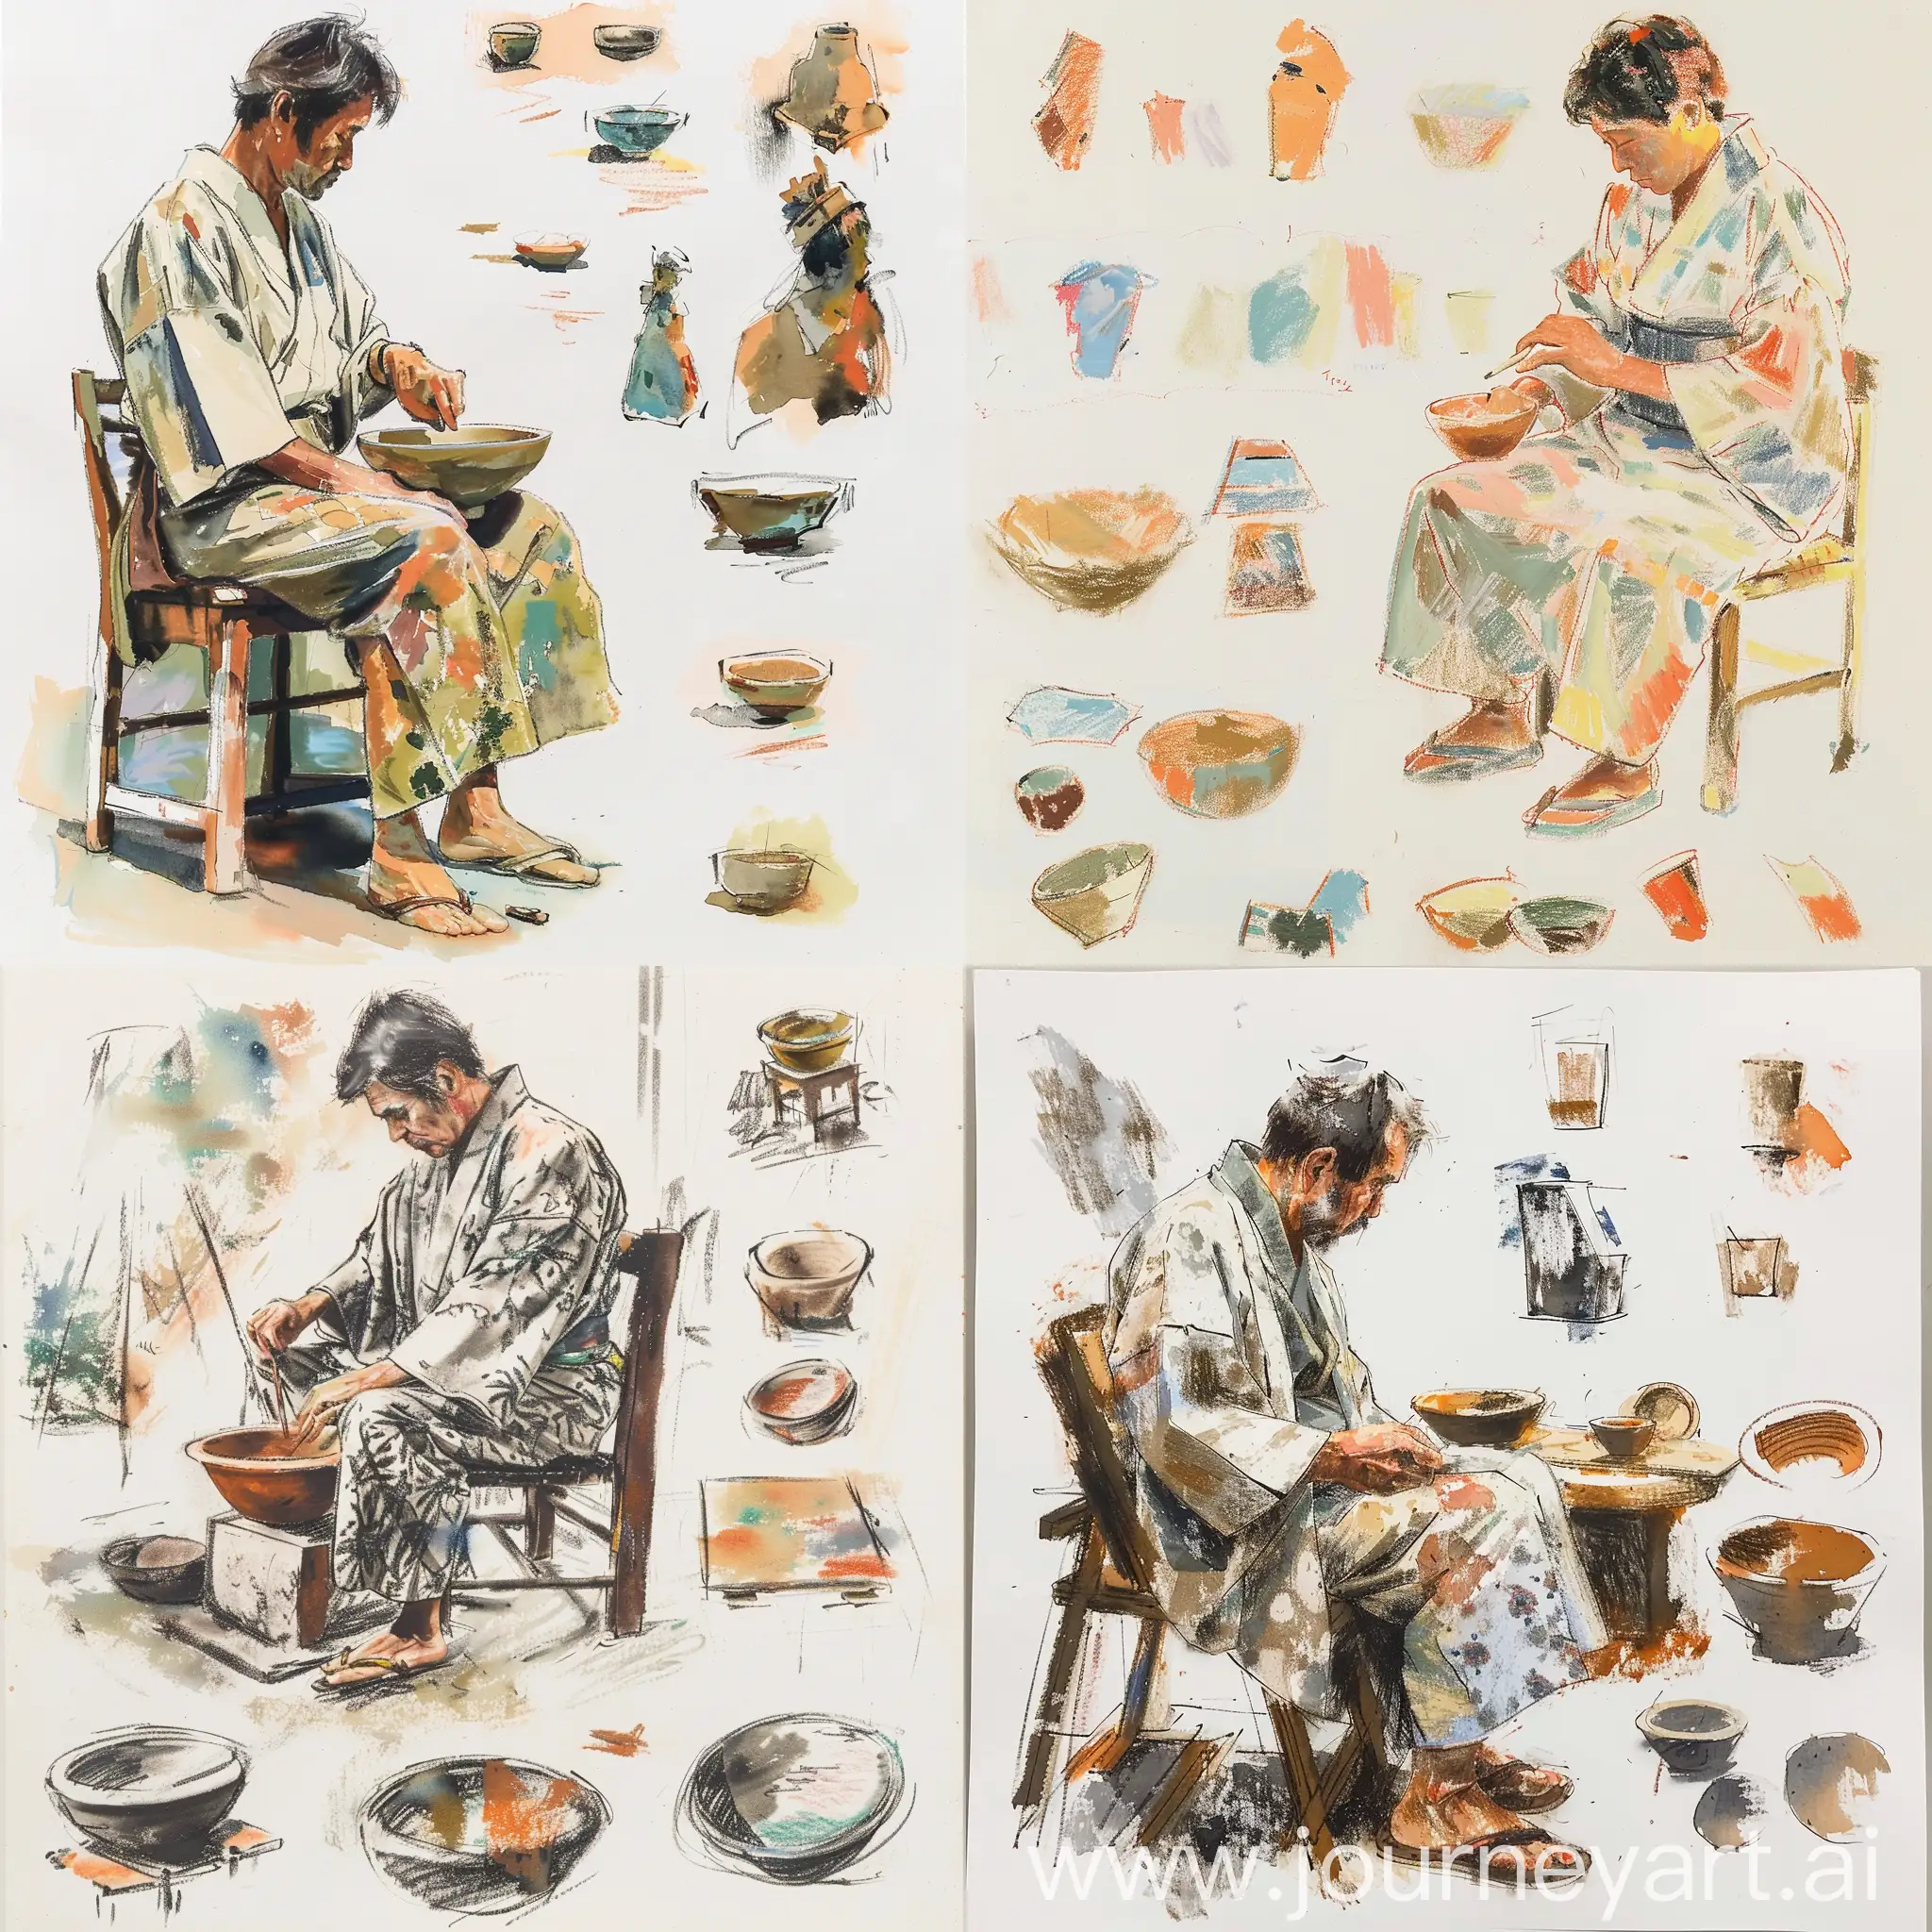 Japanese-Artisan-Potter-Crafting-Bowl-in-MatisseInspired-Style